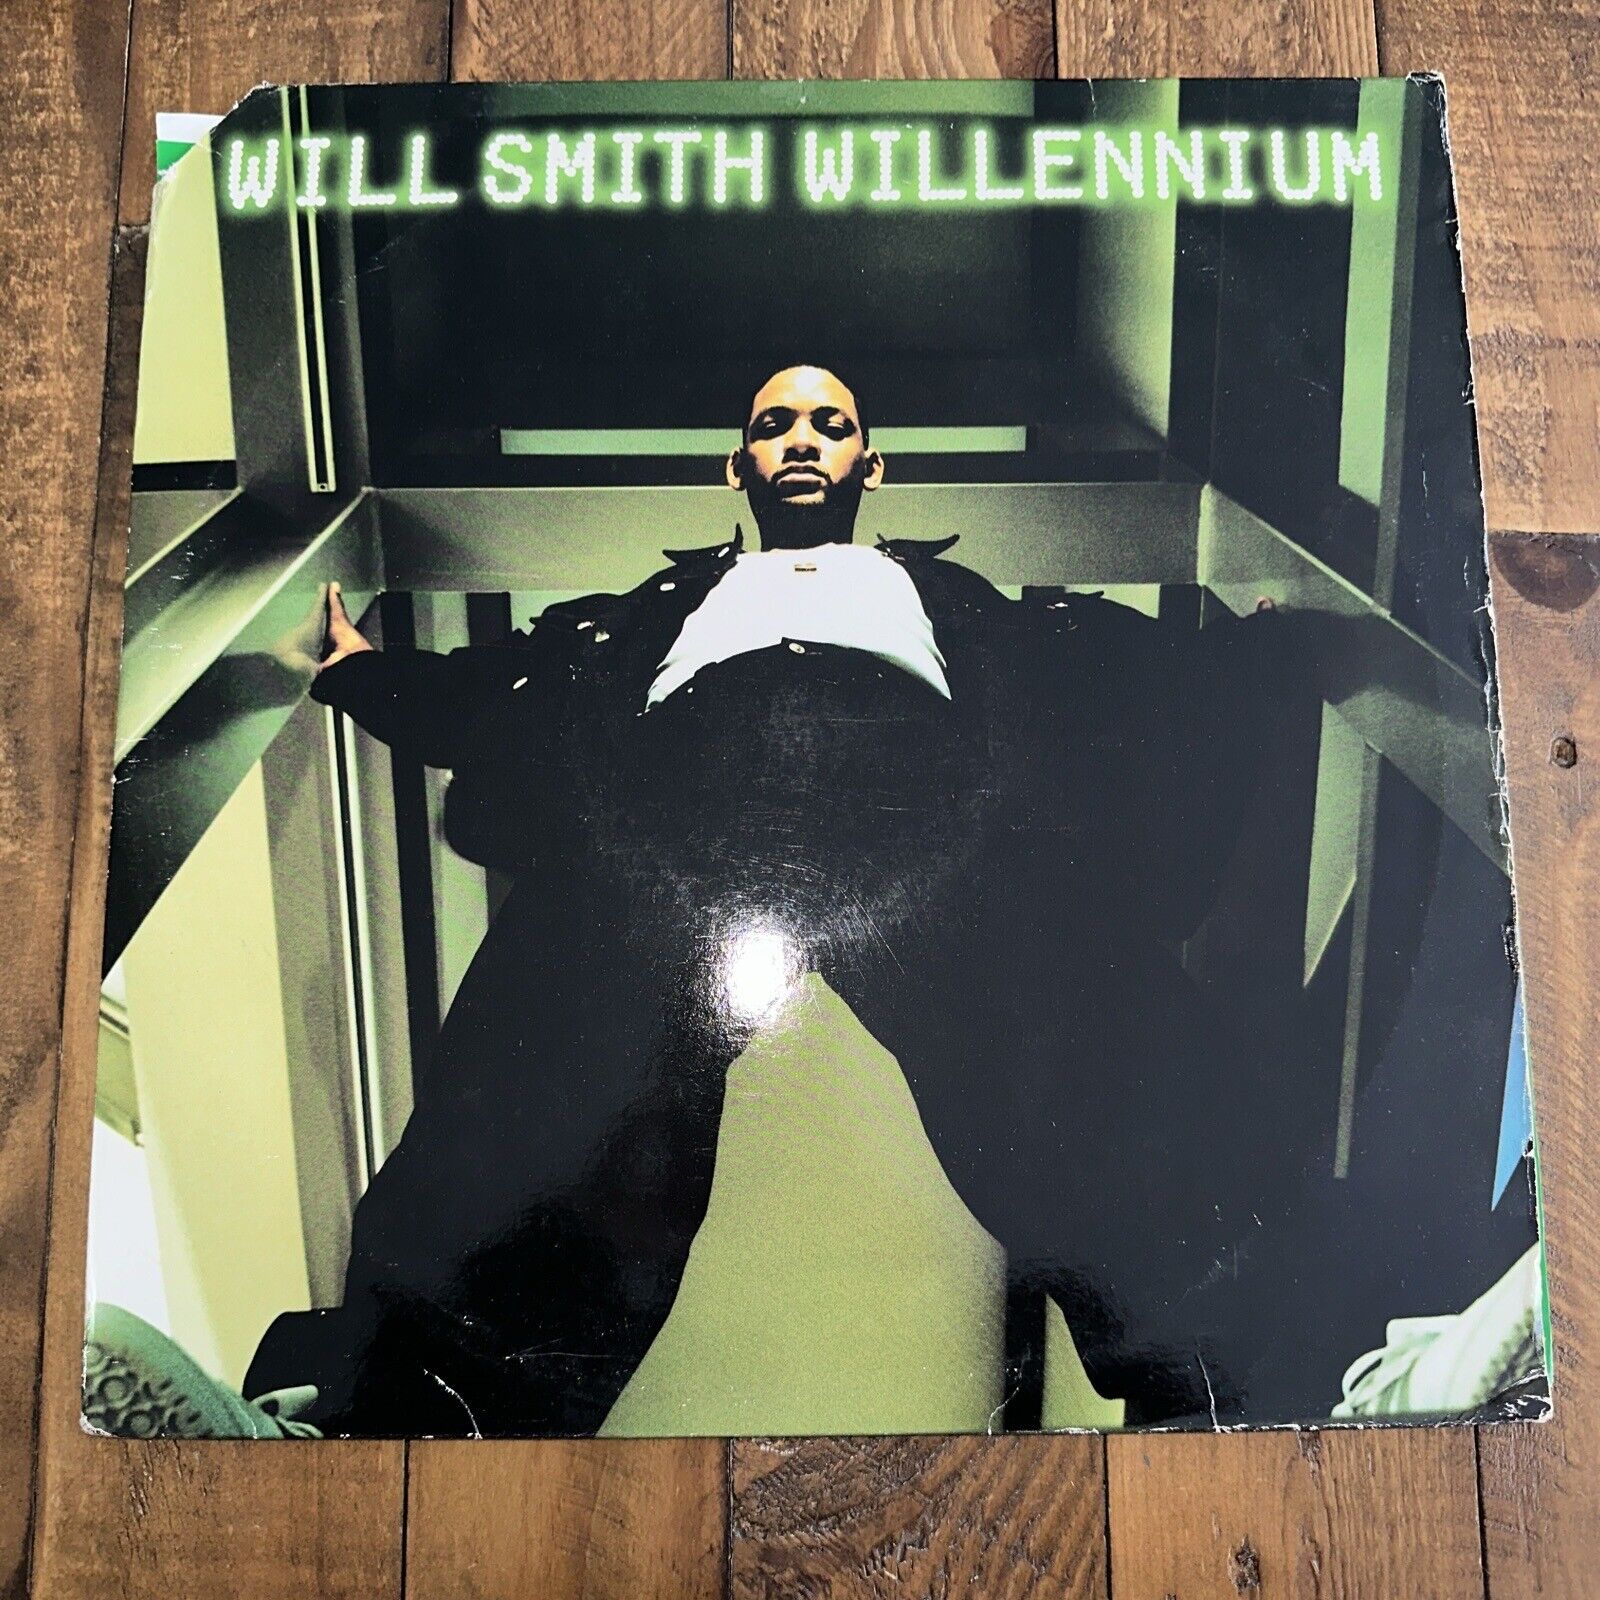 Willennium [LP] by Will Smith (Vinyl, Nov-1999, Sony Music Distribution USA)